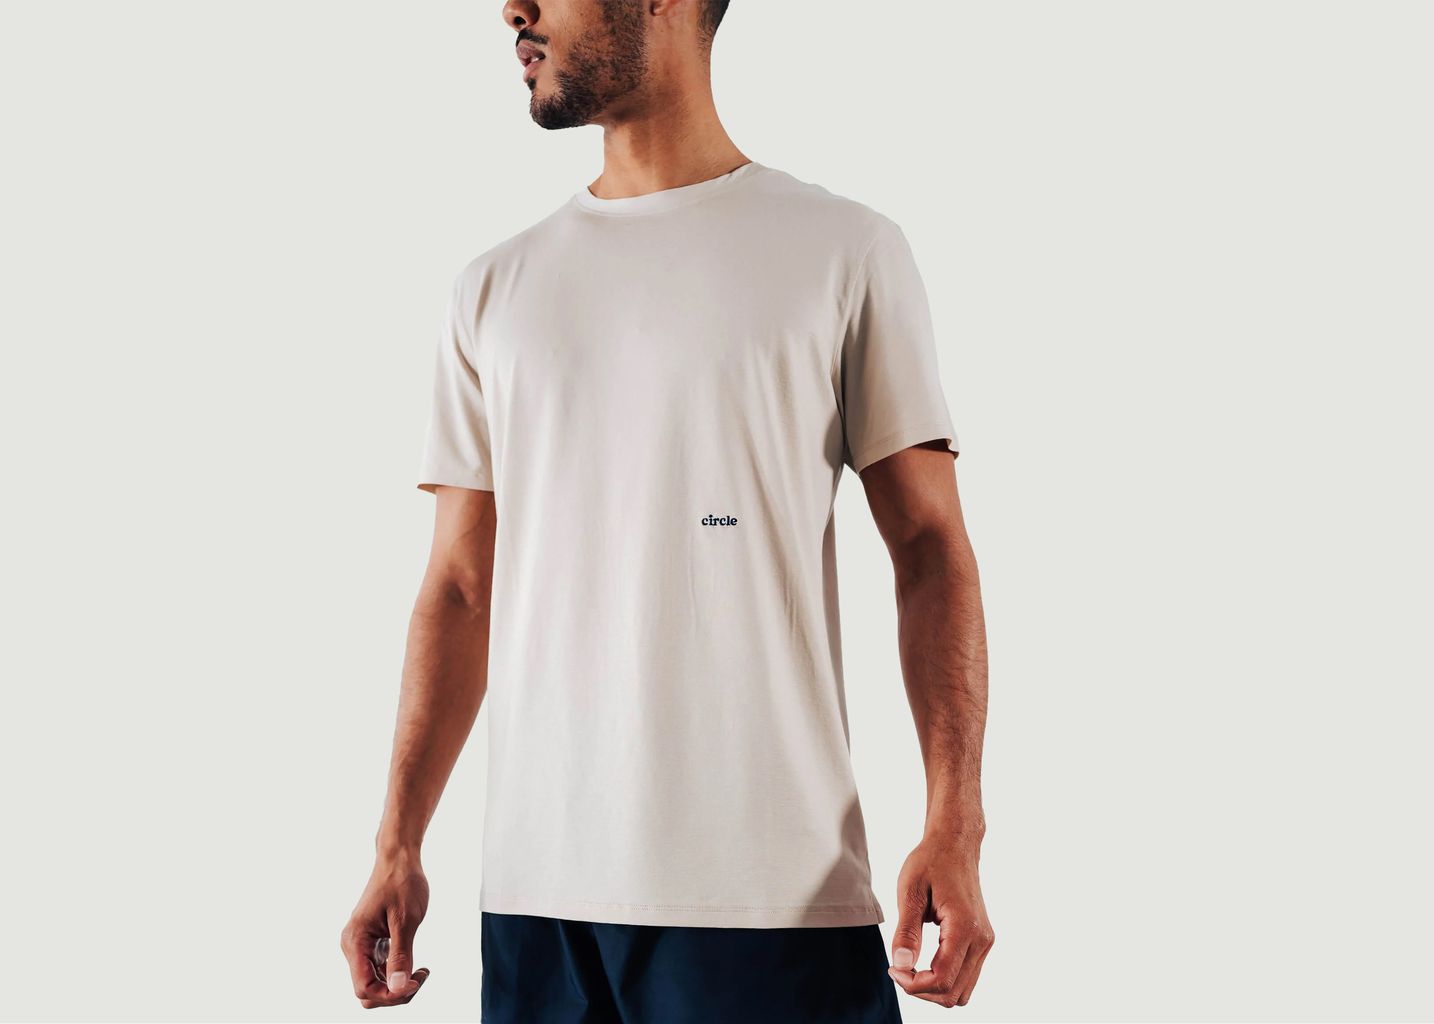 Iconic Sport Teeshirt - Circle Sportswear